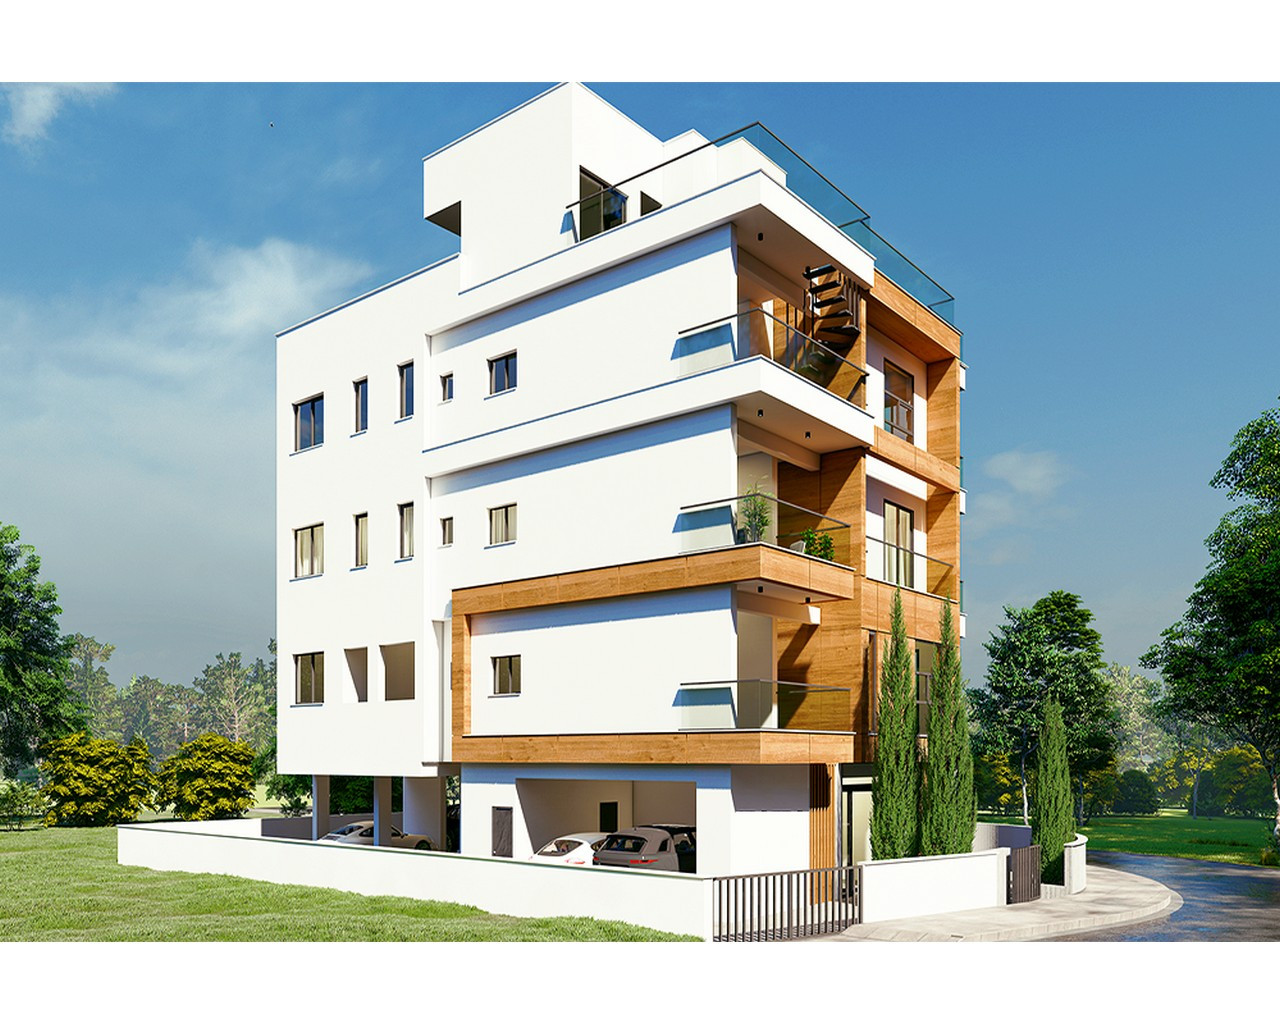 4 Bedroom Apartment for Sale in Limassol – Zakaki